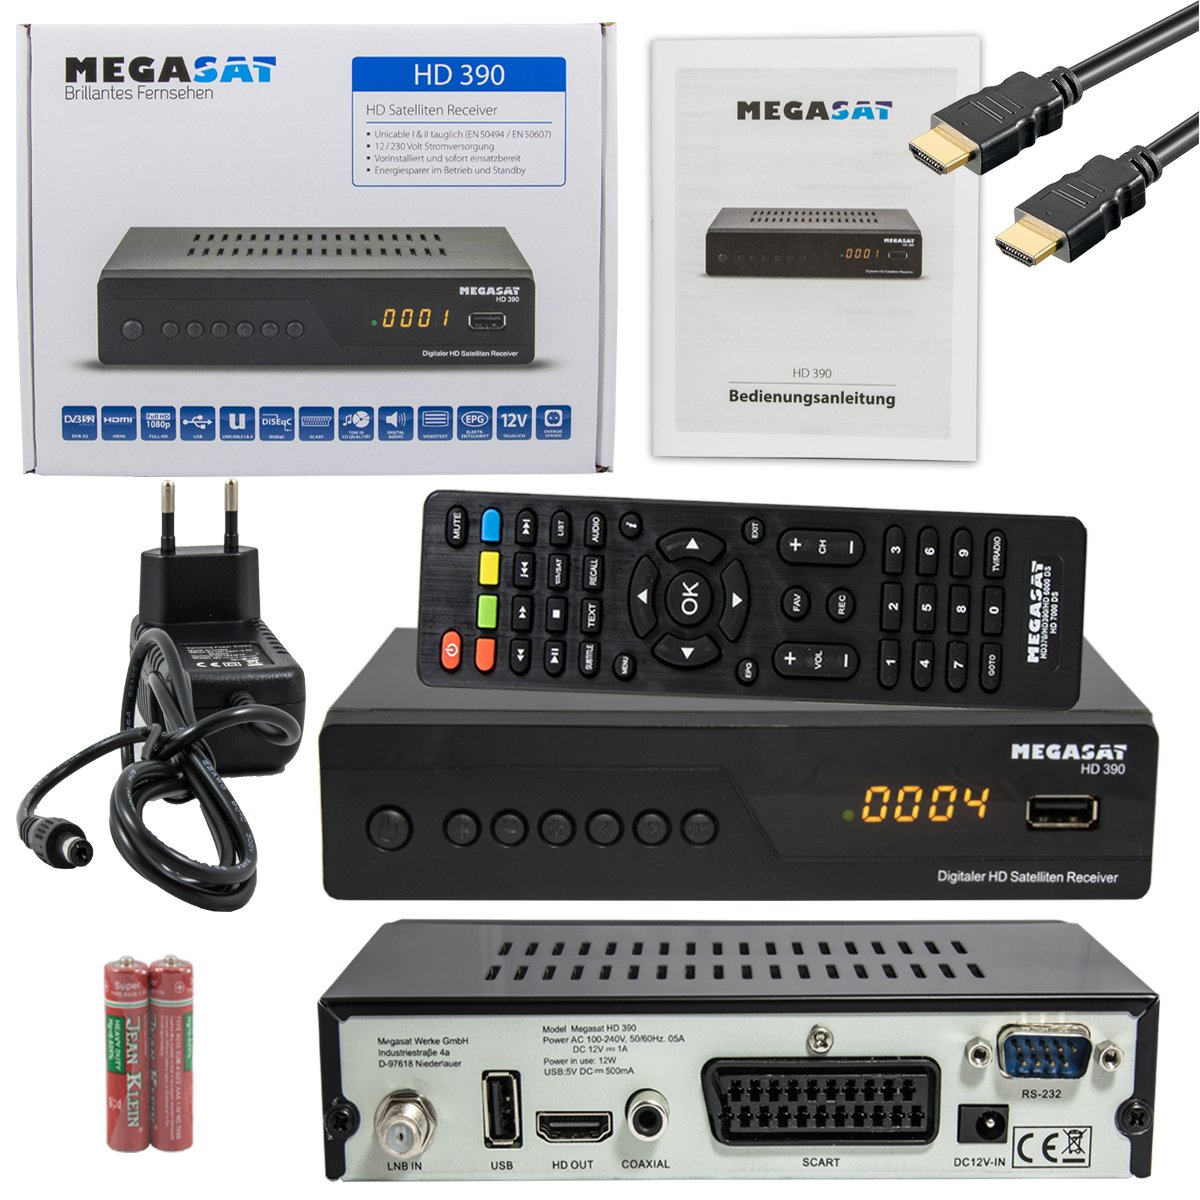 Megasat Hd 390 Satelliten Receiver